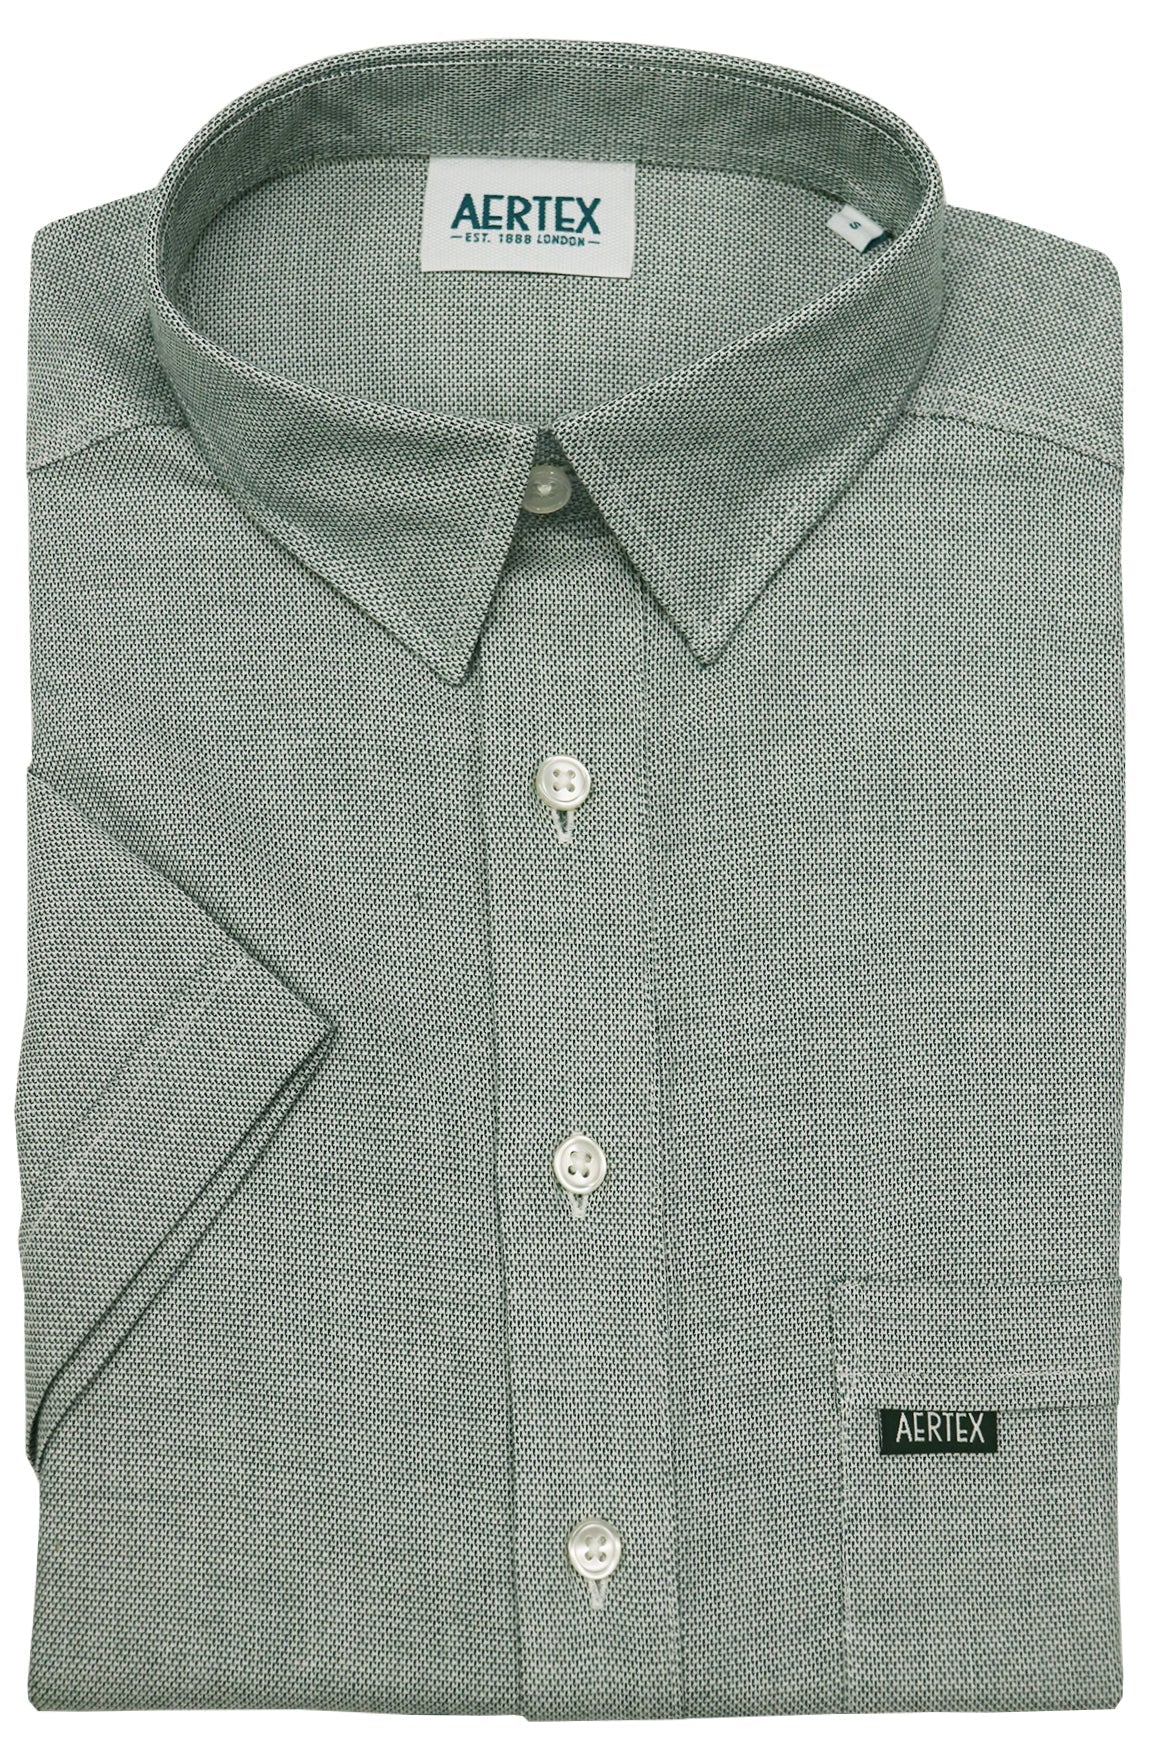 Aertex 88405 Taunton Polo - Thomson's Suits Ltd - Forest - S - 5305